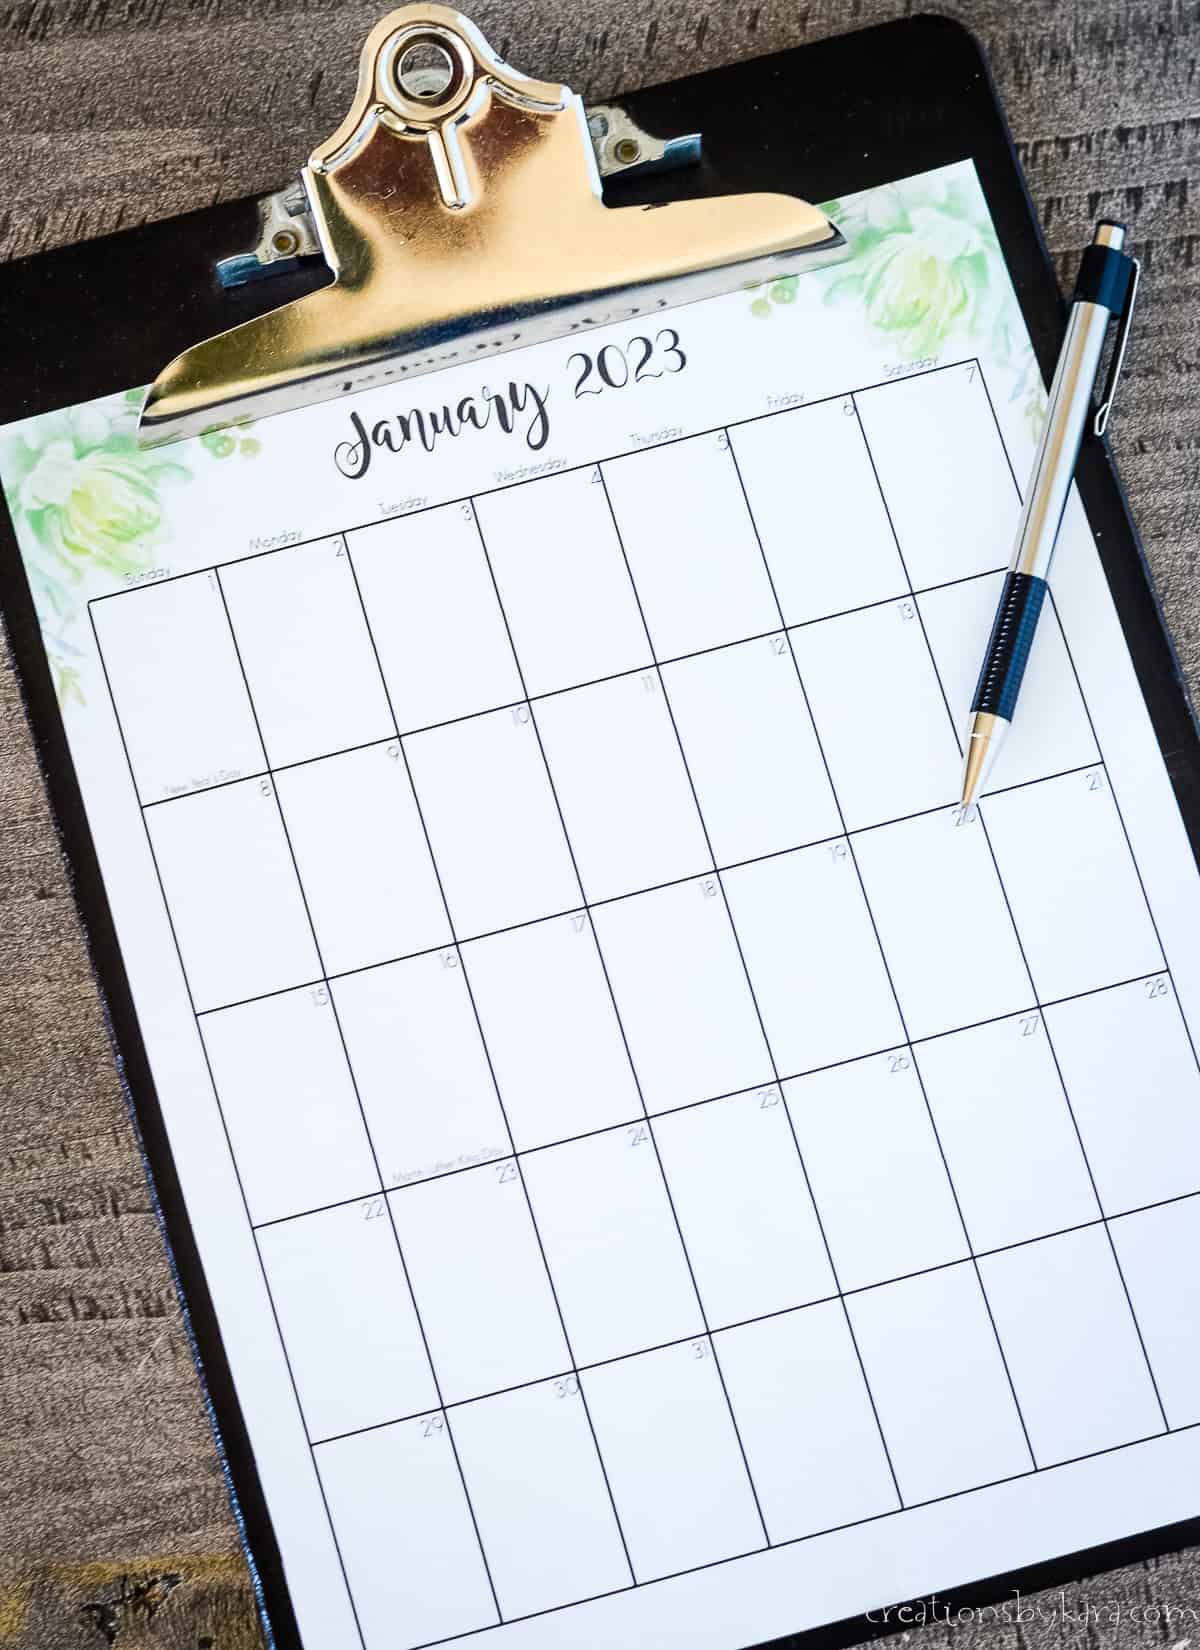 january 2023 calendar page on a clipboard